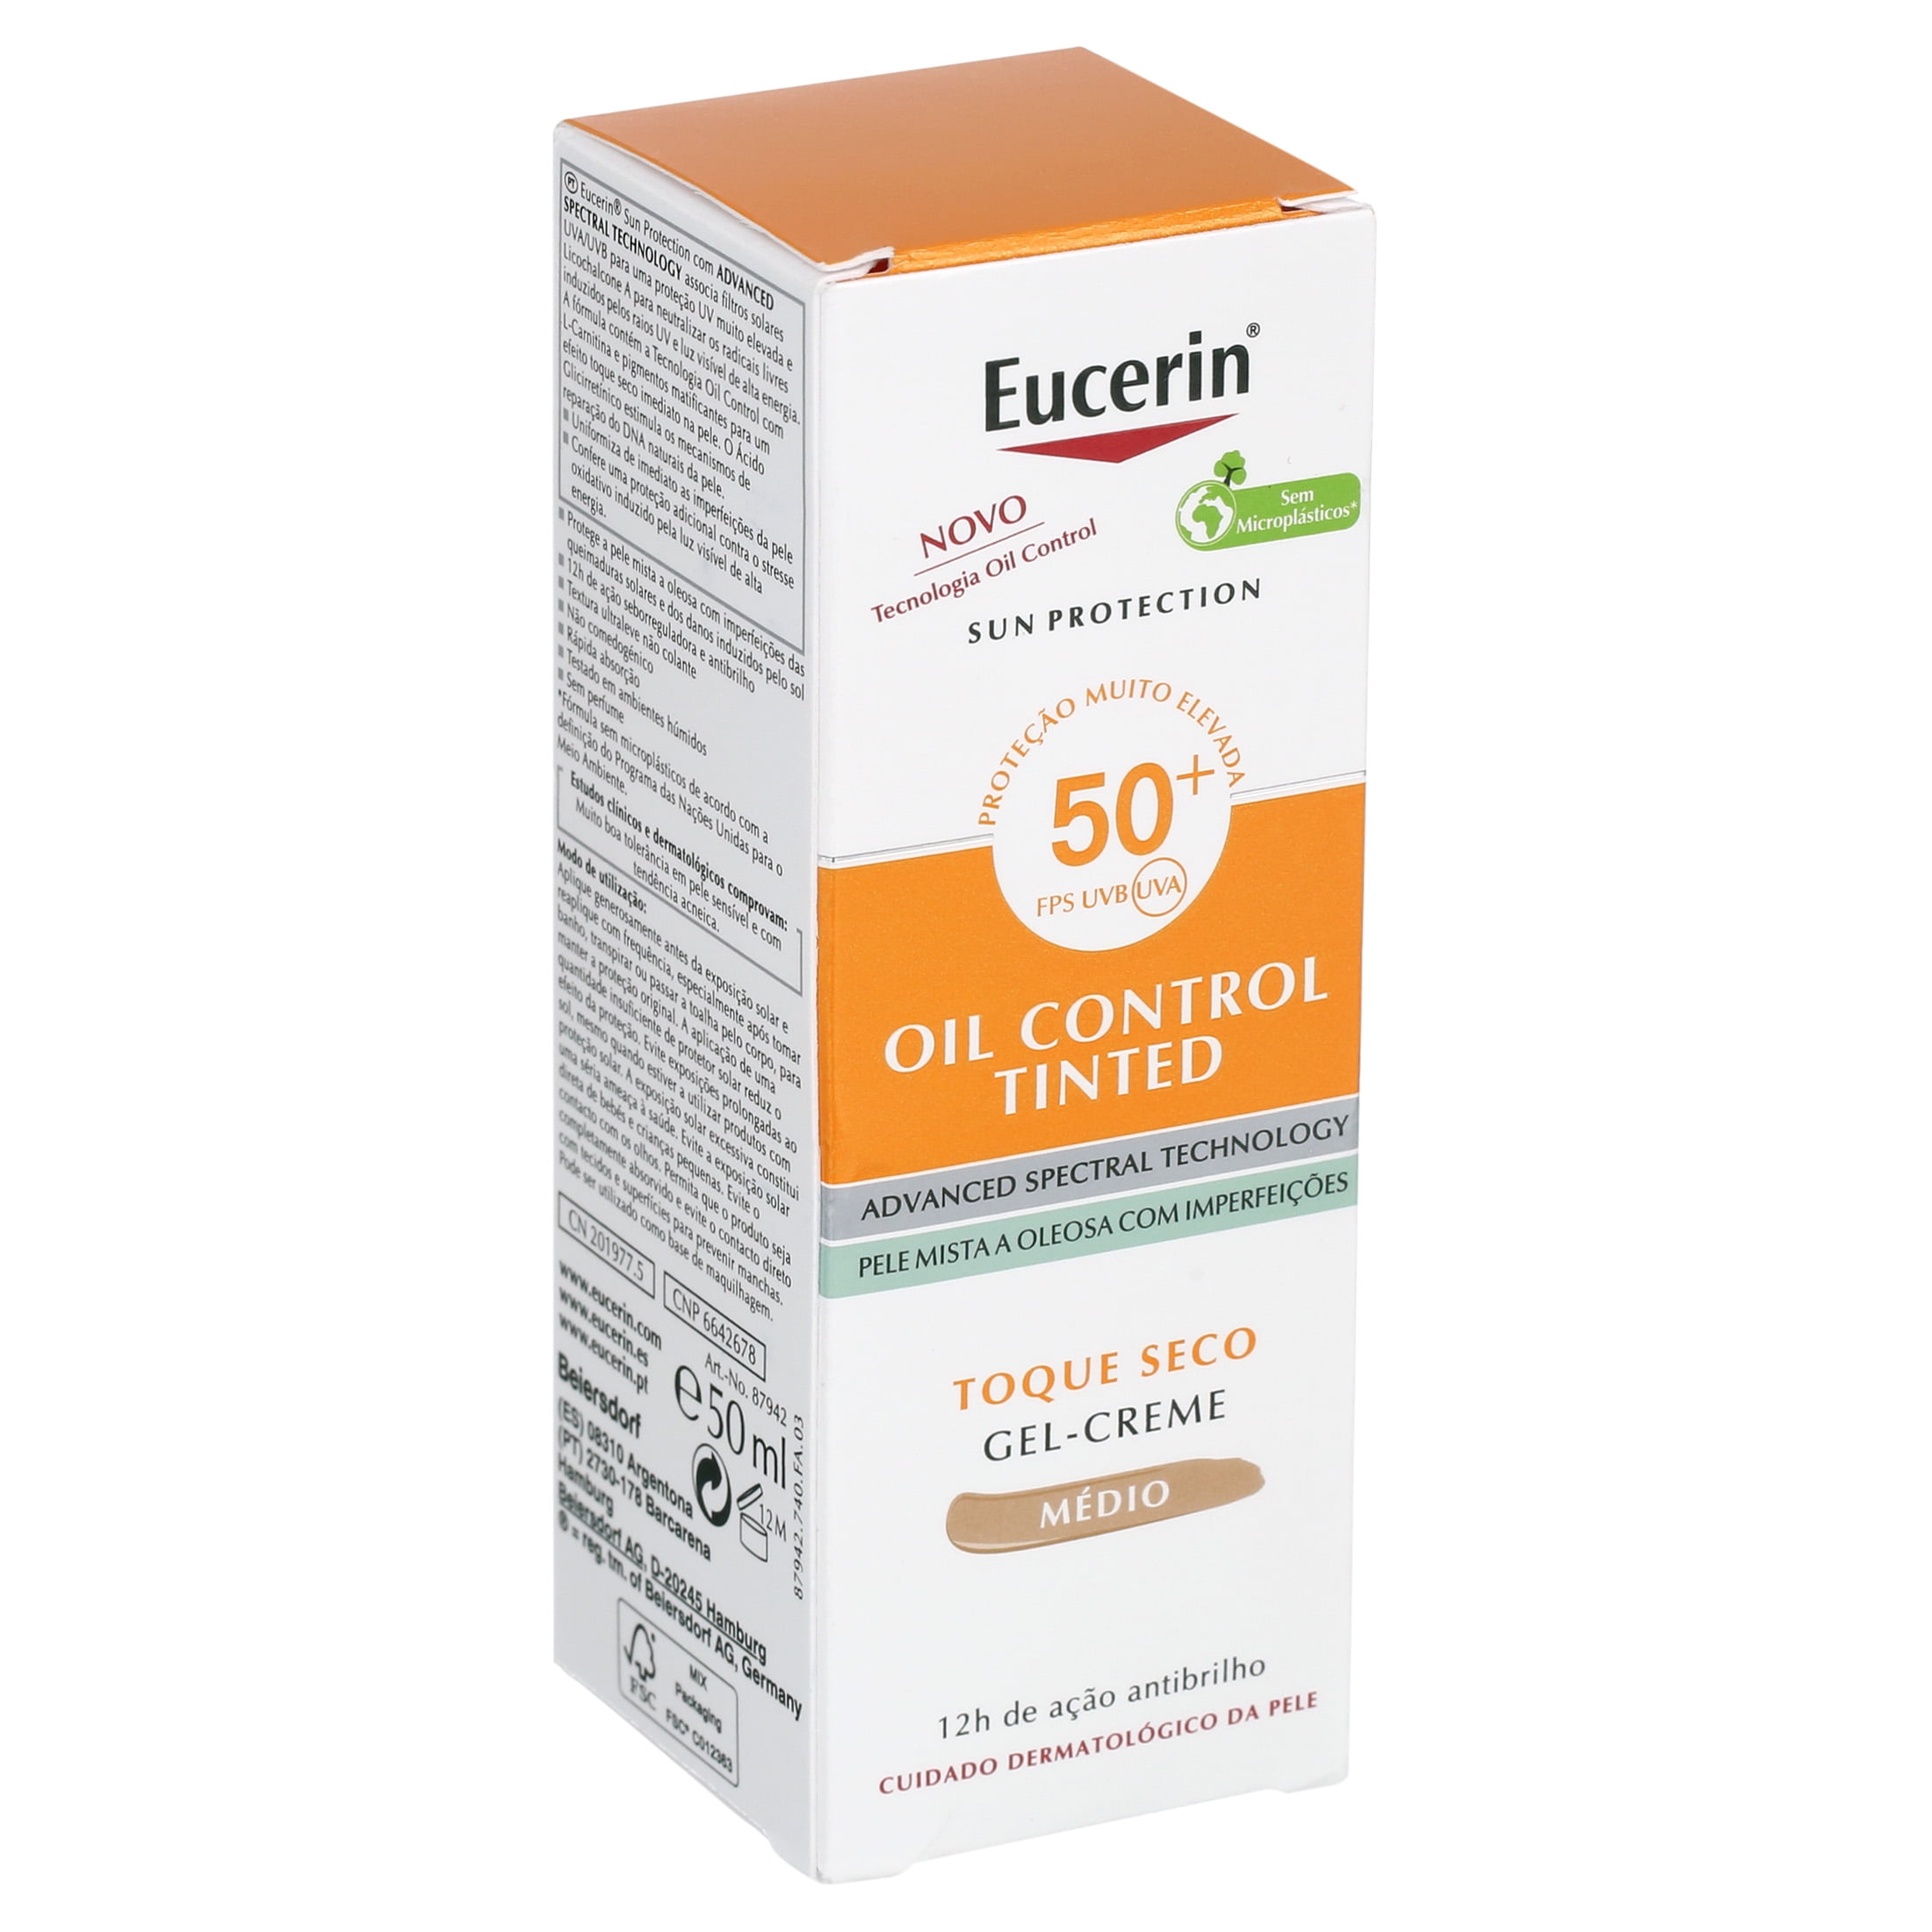 Eucerin Oil Control Sun Gel Cream SPF 50+ New Formula (Tinasorb S,..)????  Fake?? : r/EuroSkincare